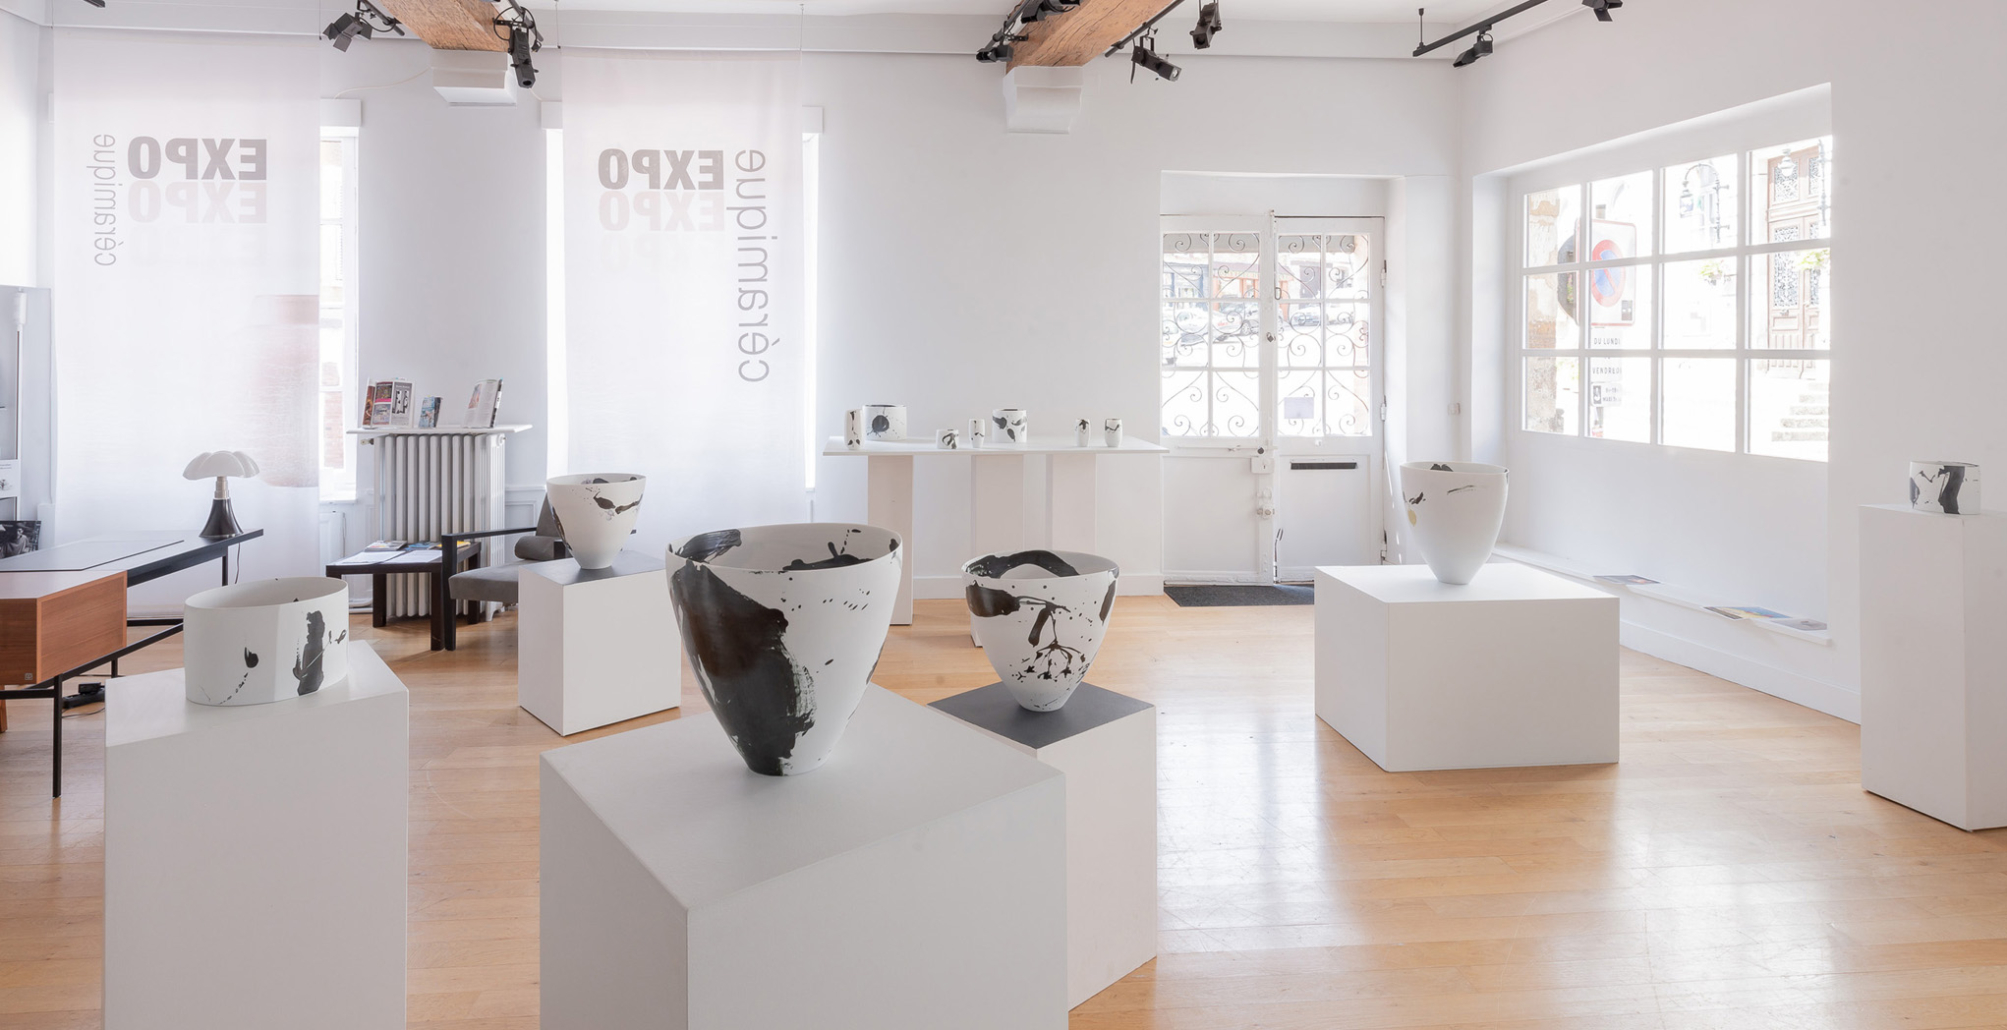 Karin Bablok ceramic - contemporary ceramic - ceramic exhibition - art ceramic - ceramic art - ceramic gallery - ceramic artist